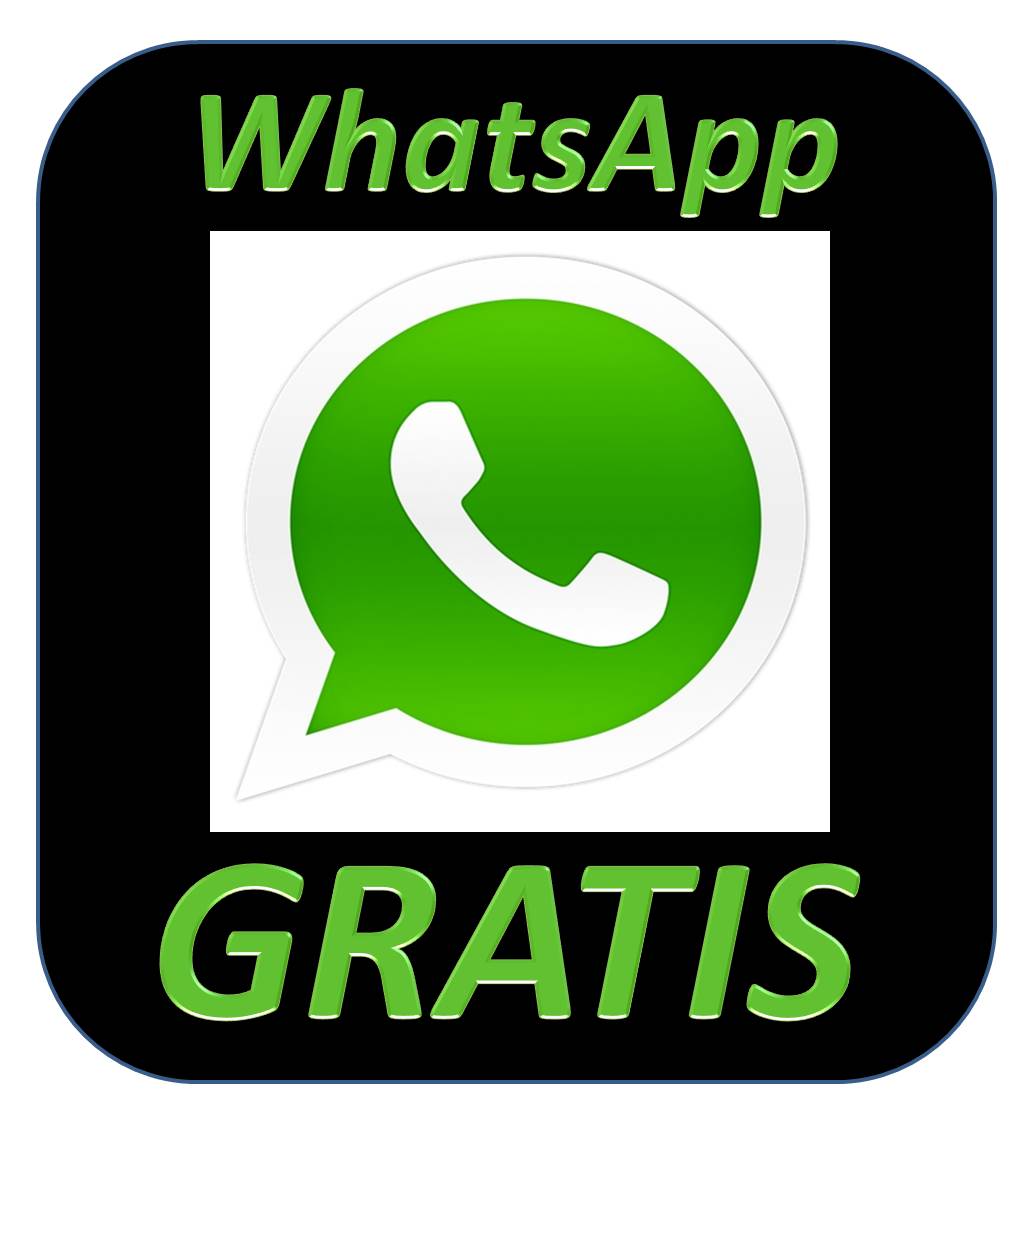 WhatsApp Gratis